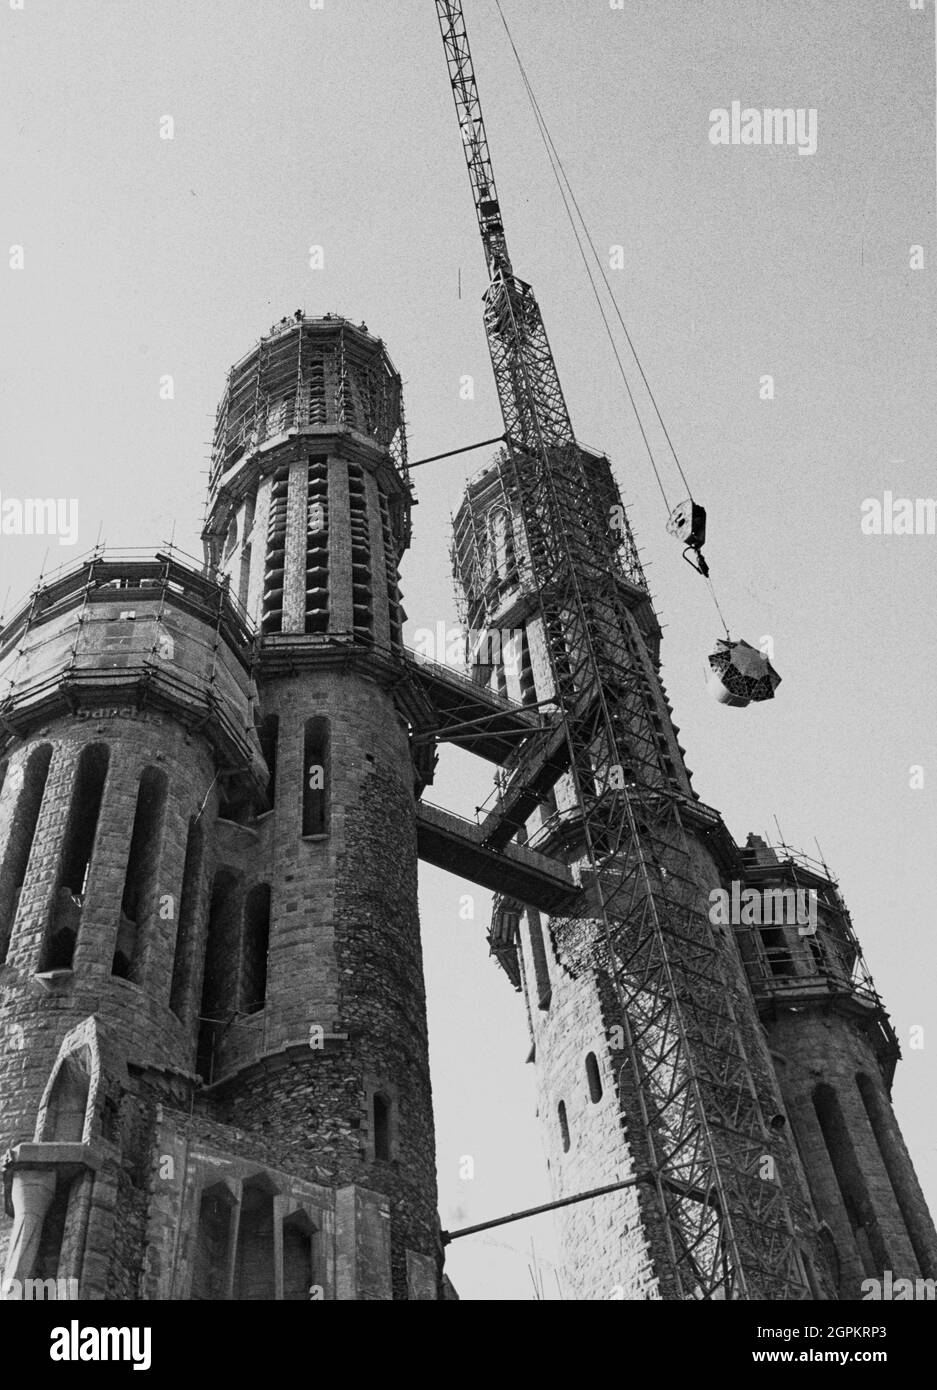 Deskundige neerhalen Stijg Towers+rosette Black and White Stock Photos & Images - Alamy